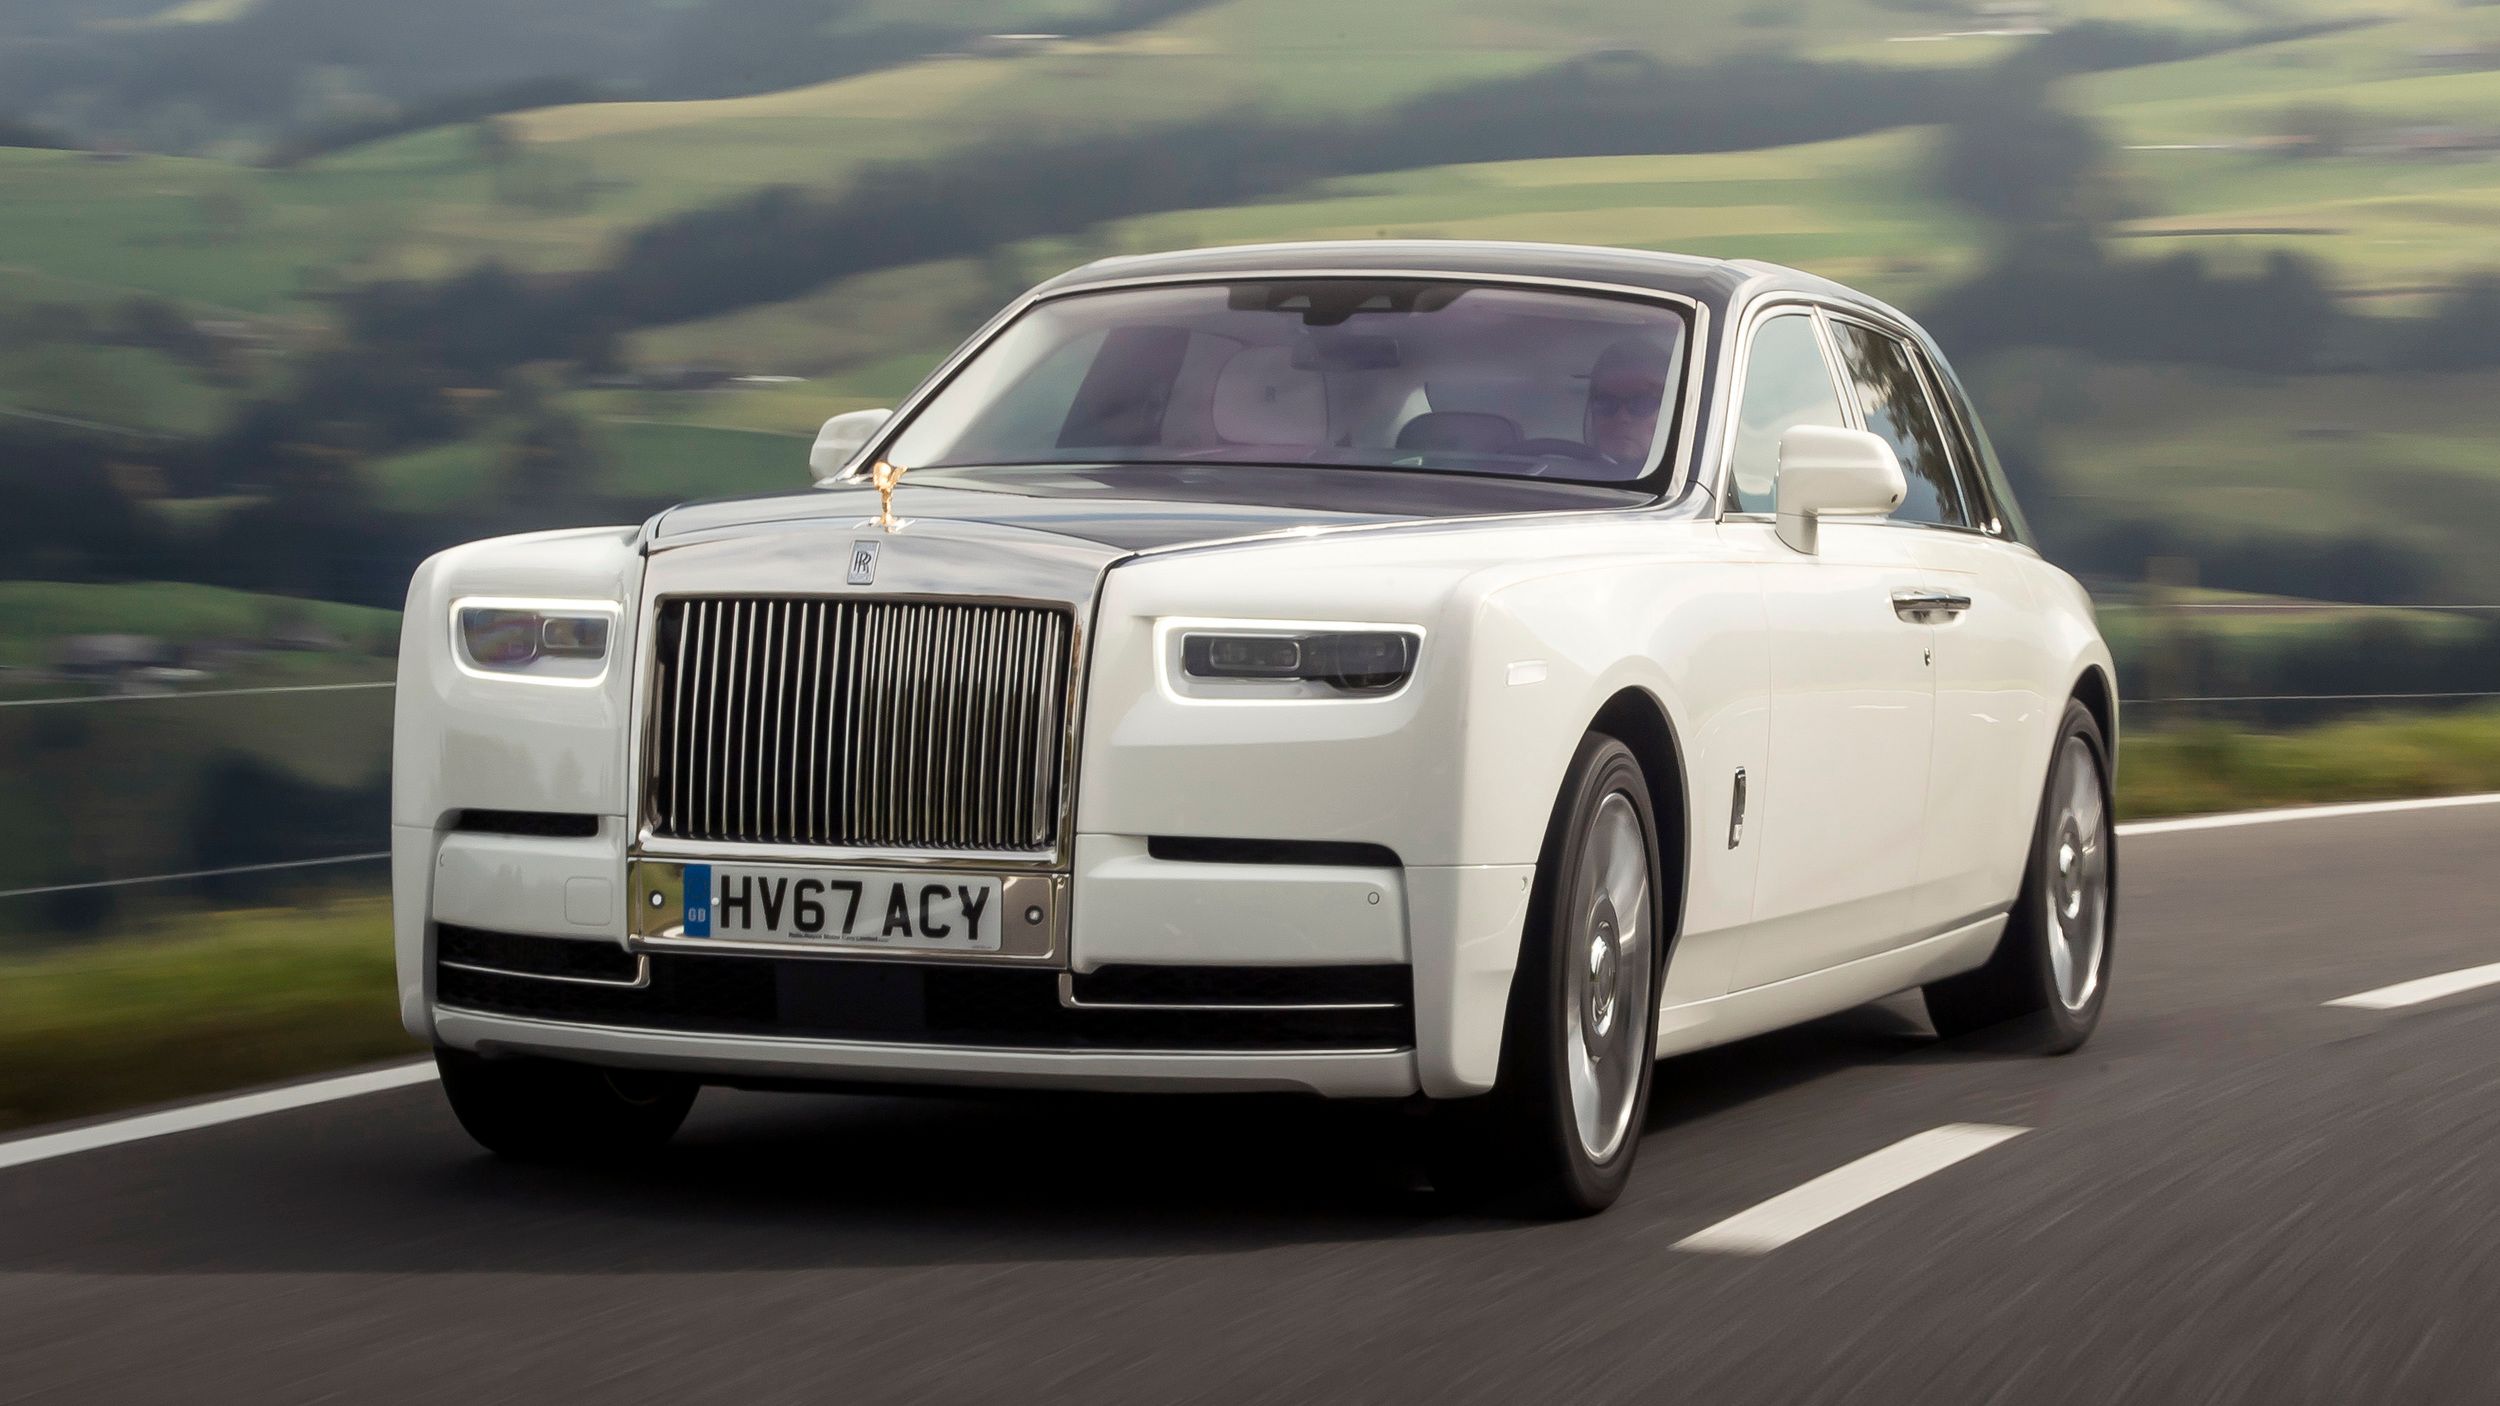 Rolls Royce Phantom on the highway